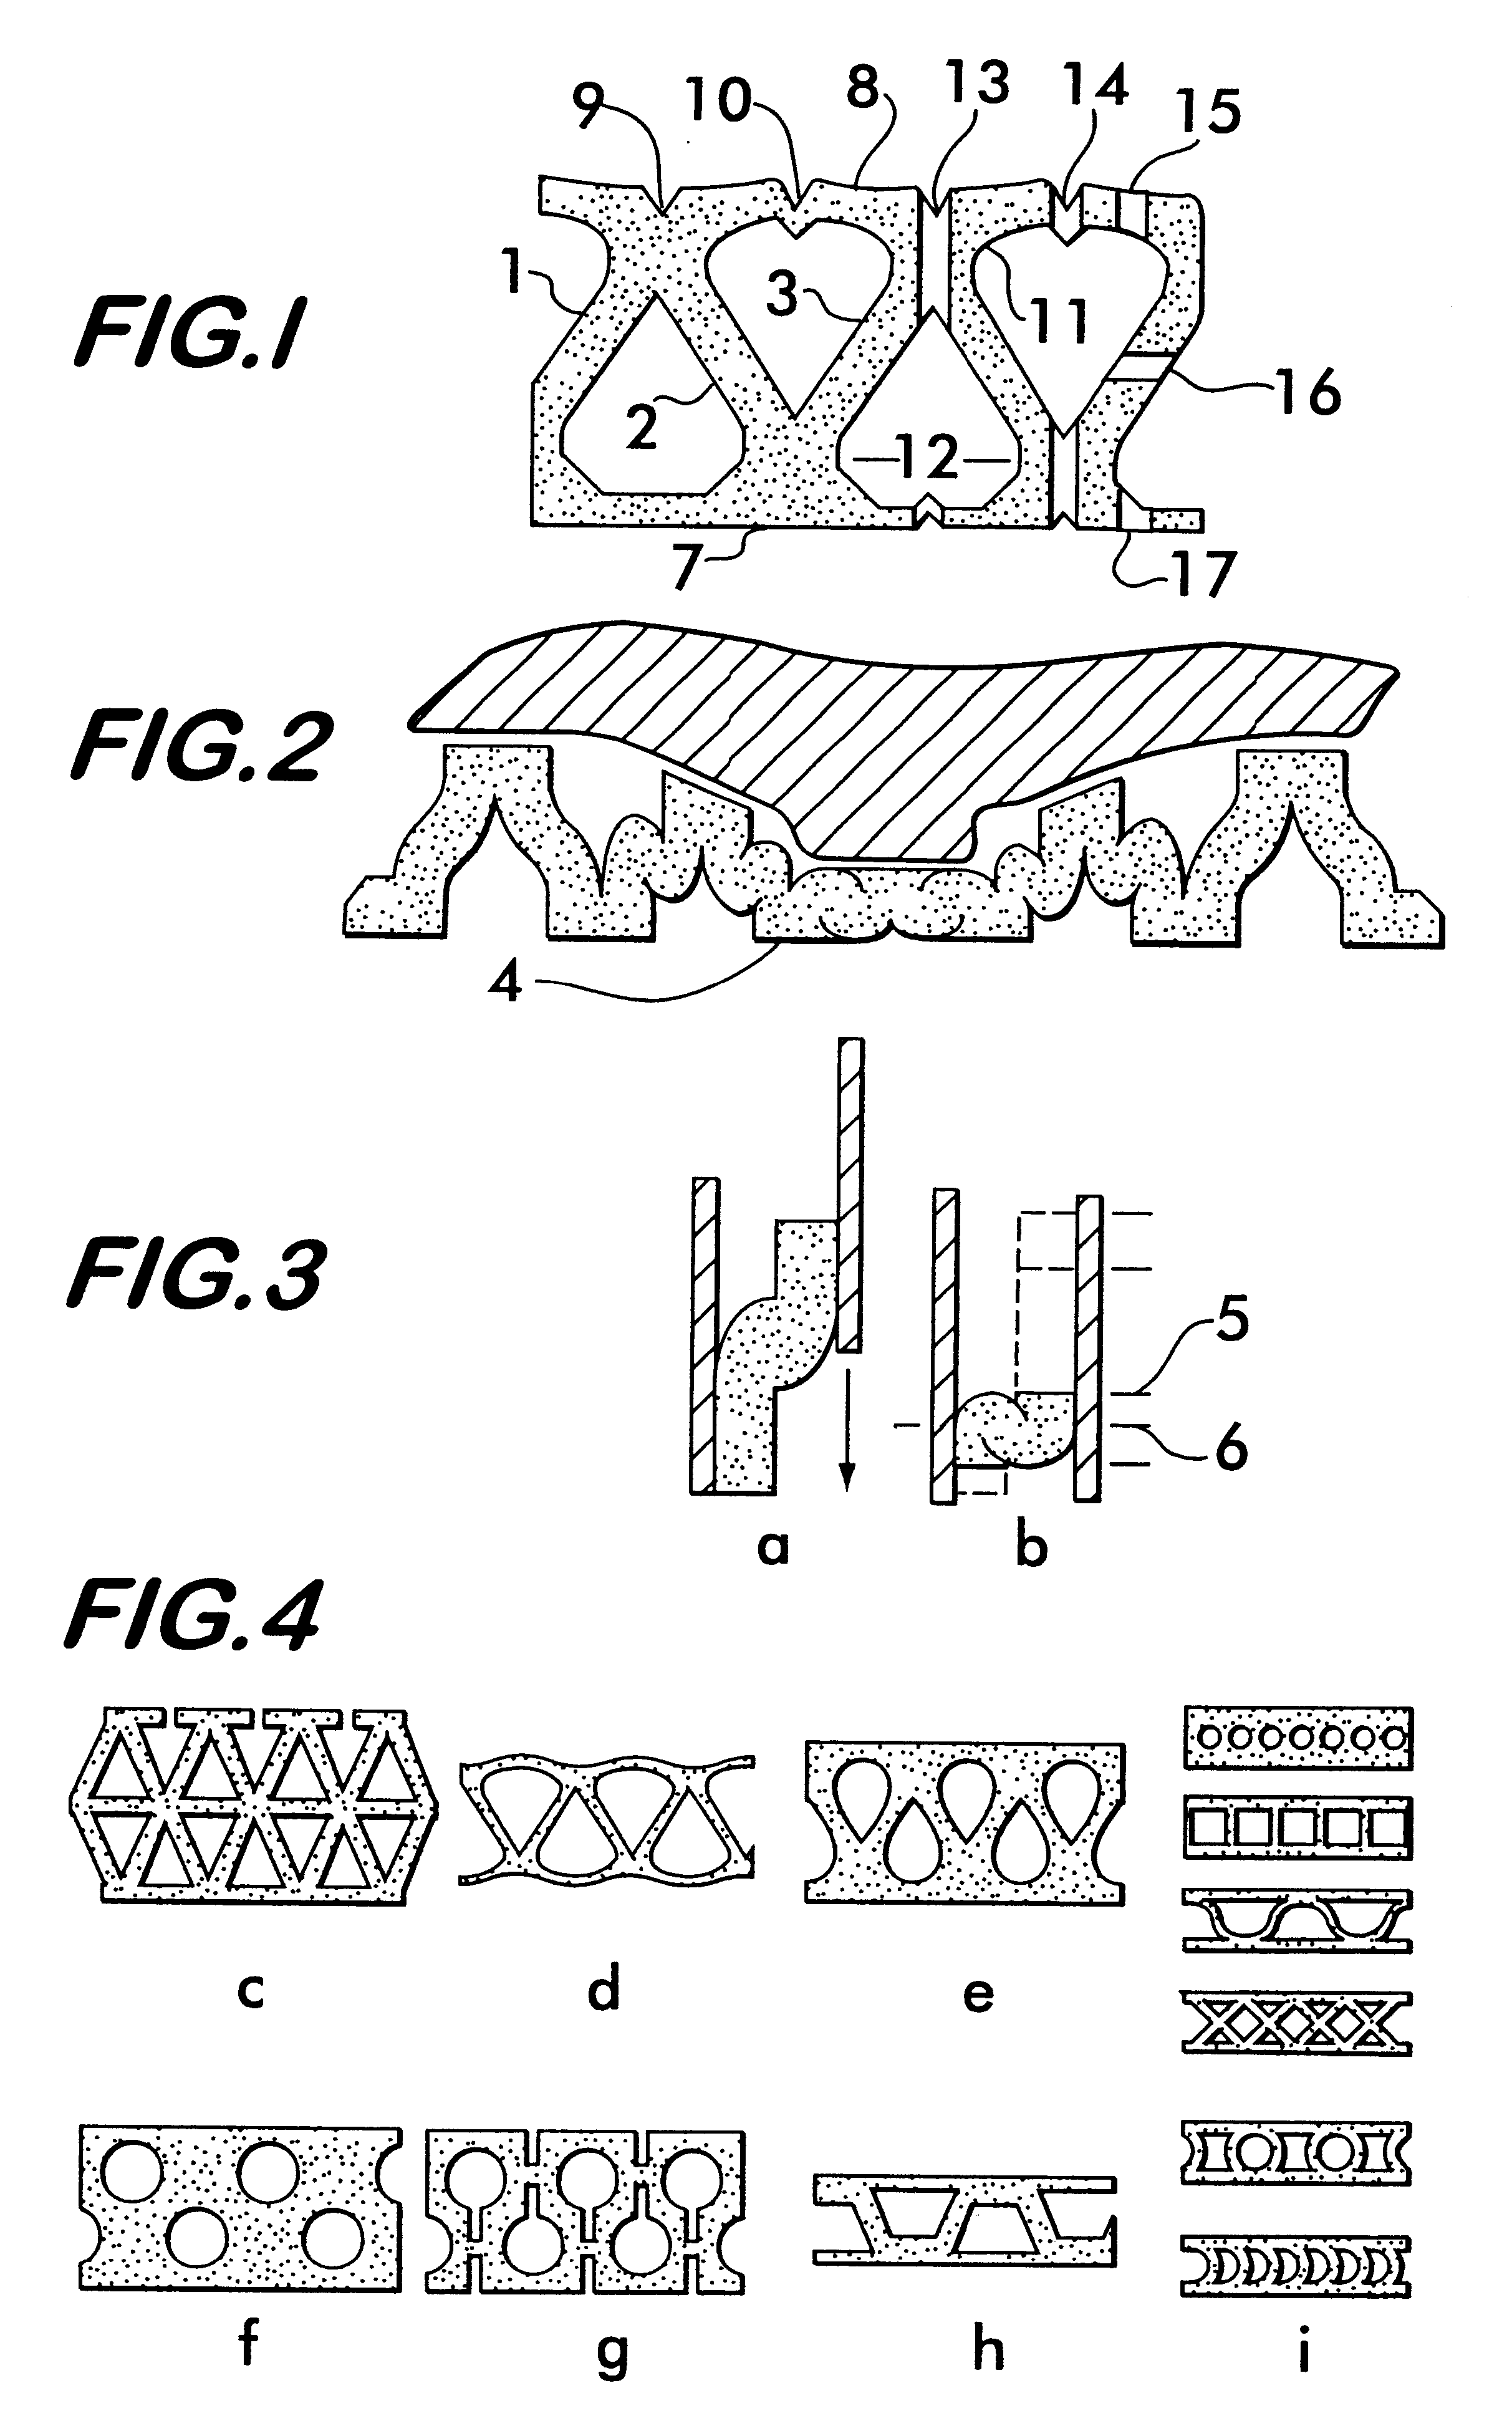 Macrocellular cushion and folding elastomer truss